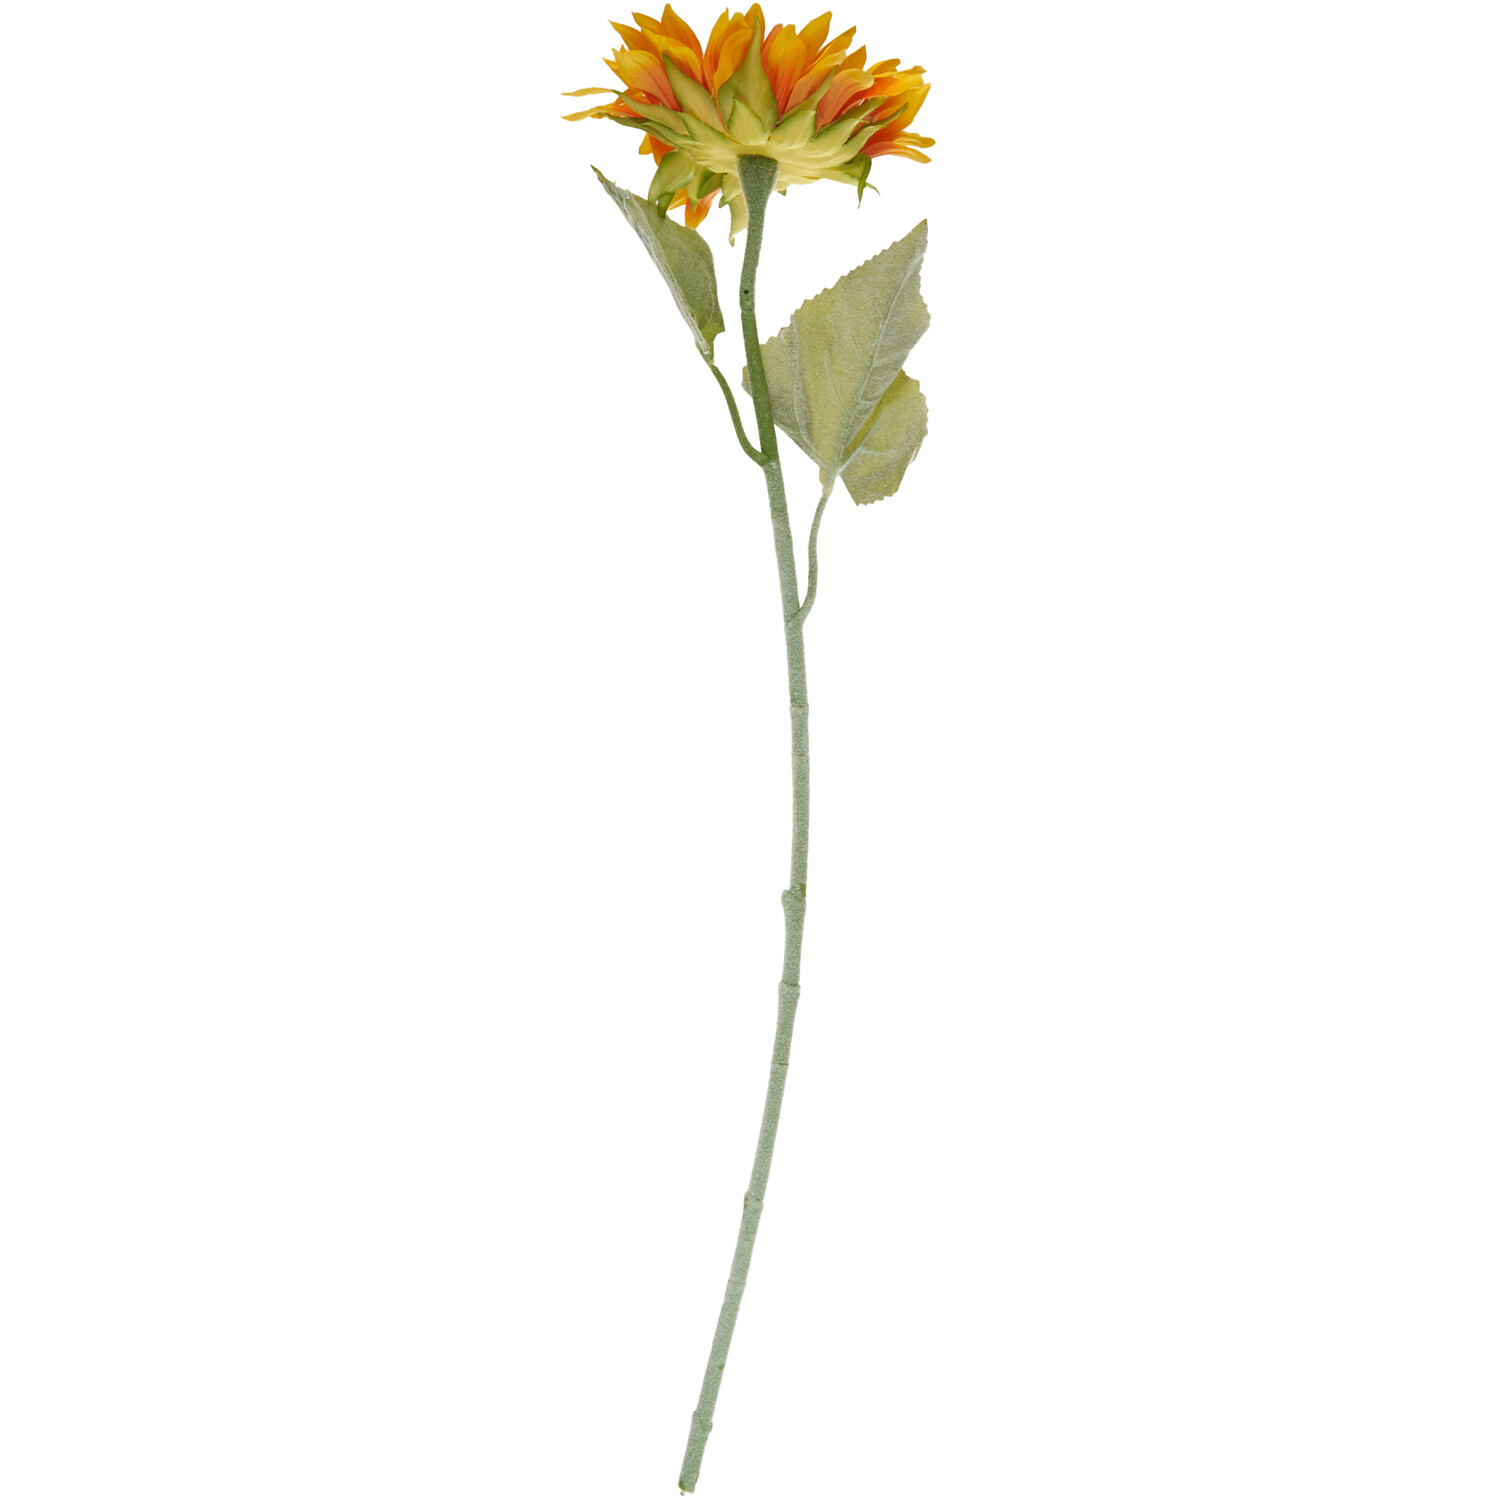 61cm Sunflower Stem - Yellow Image 1